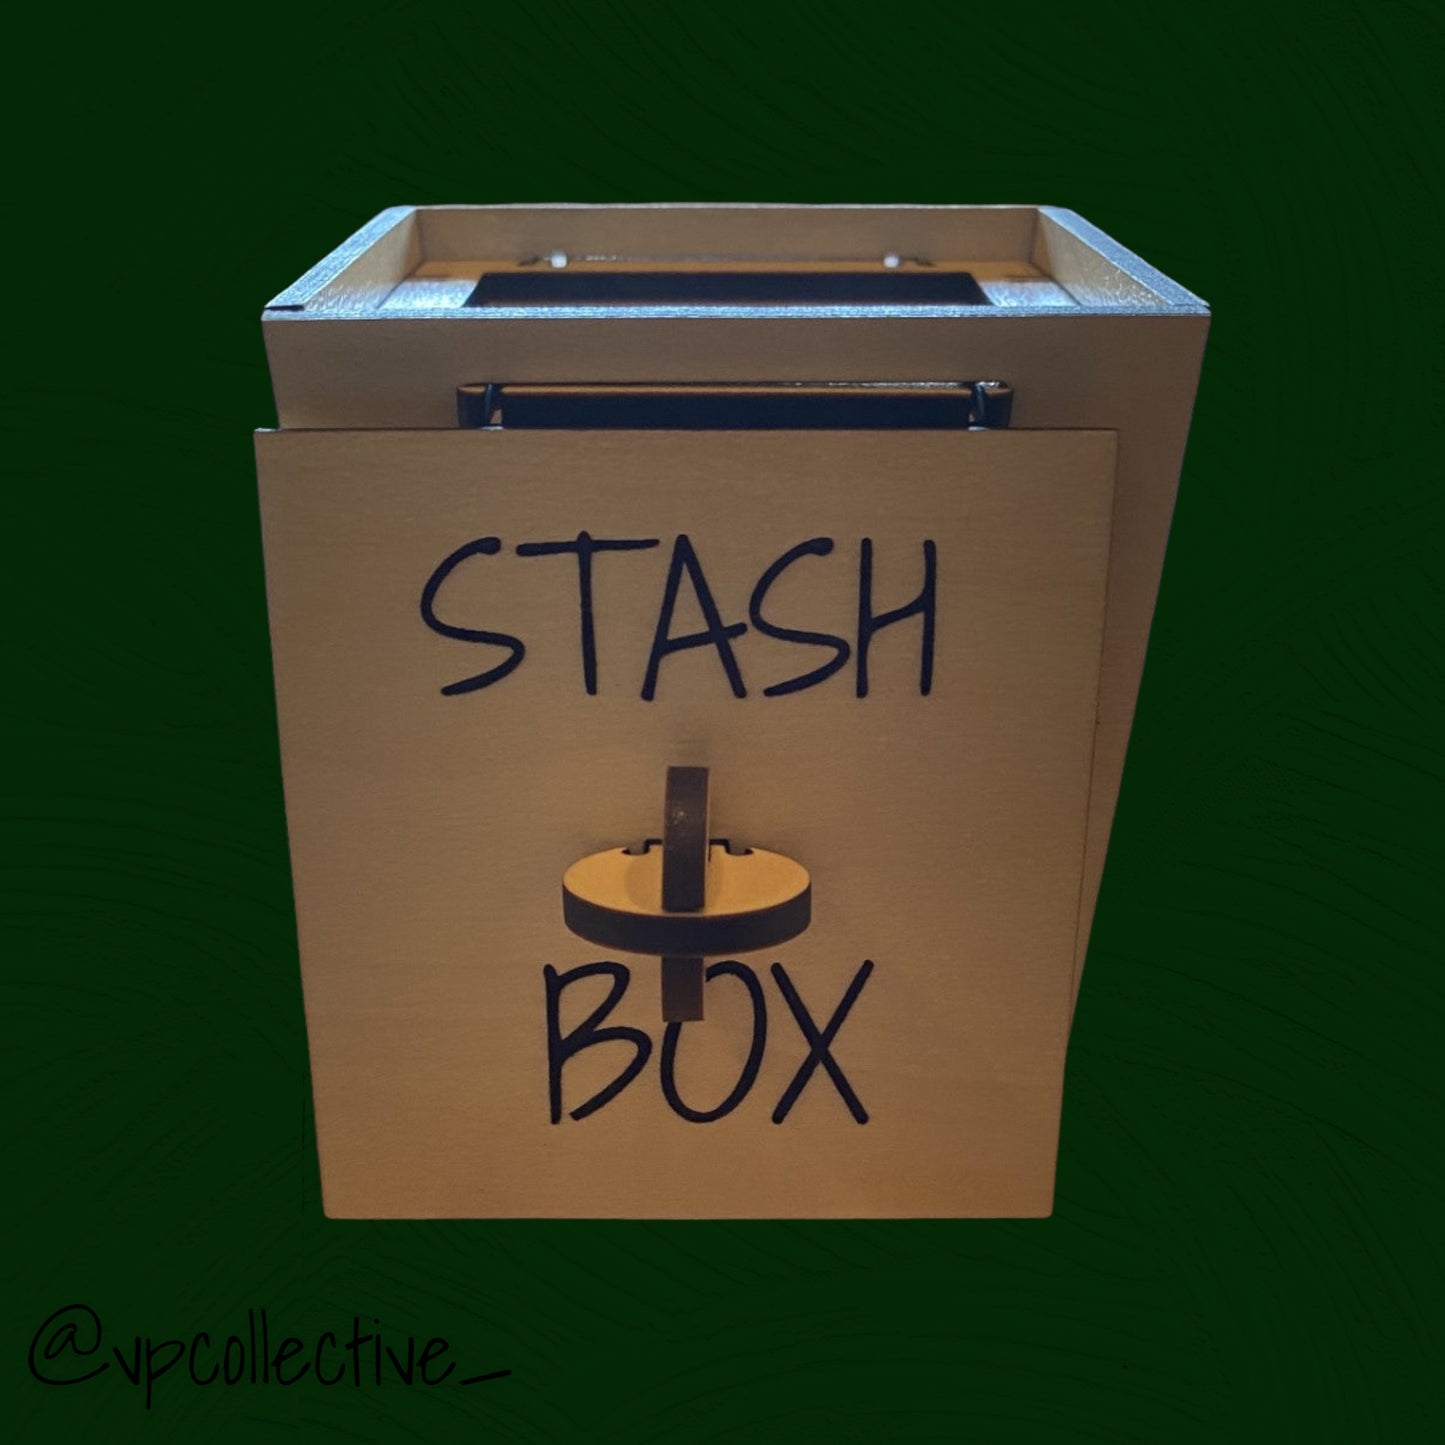 Stash Box